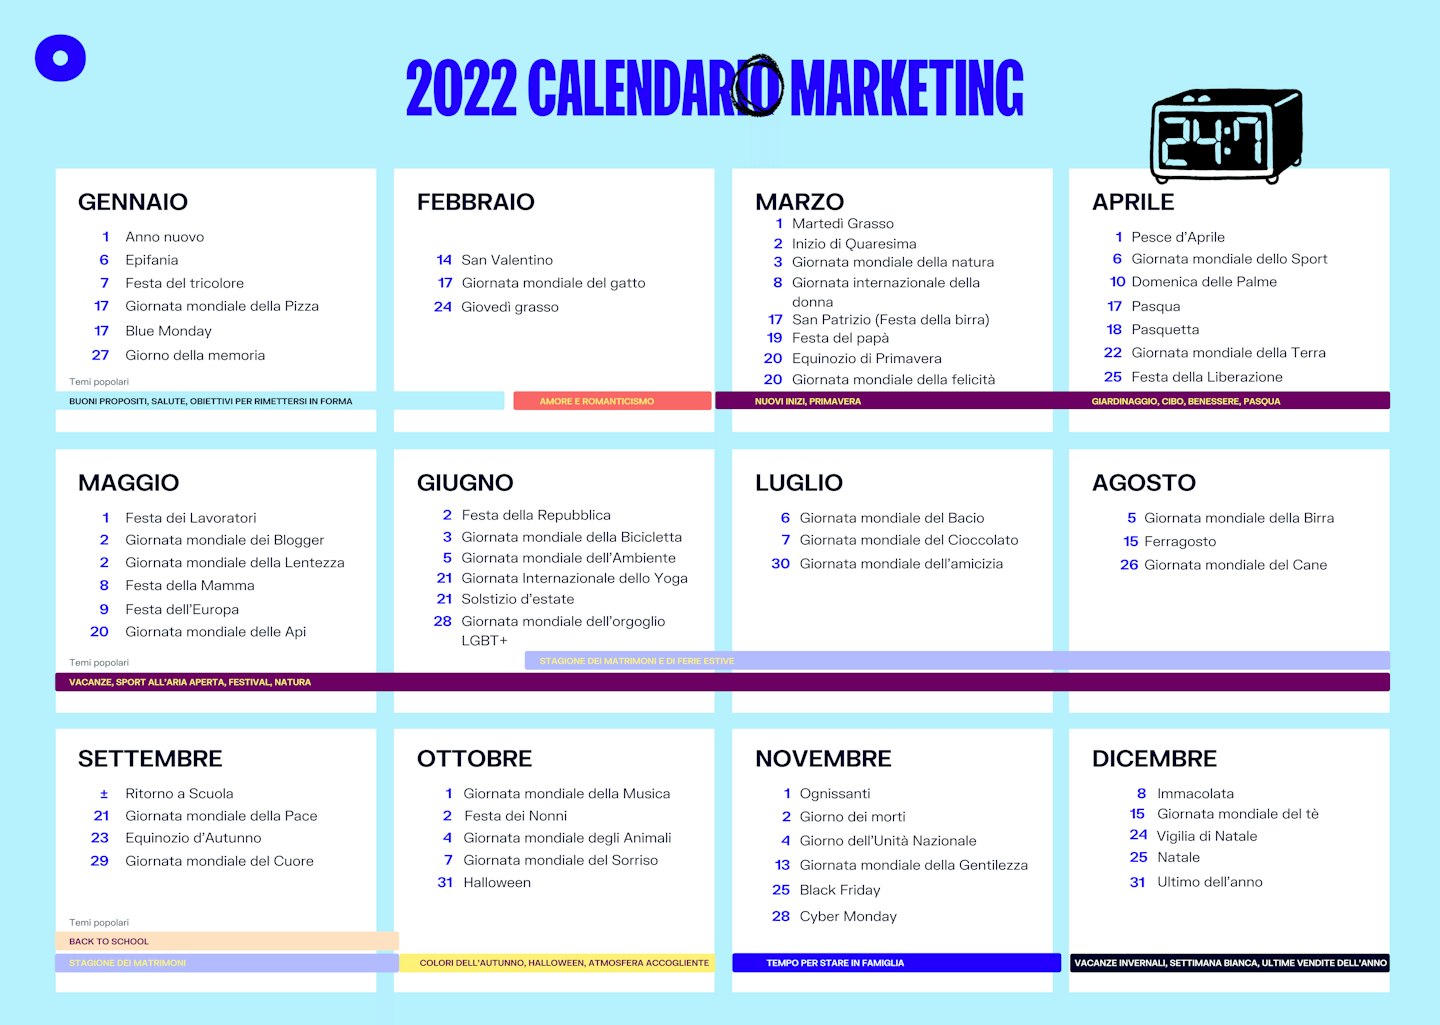 Calendario ecommerce 2022 Oberlo